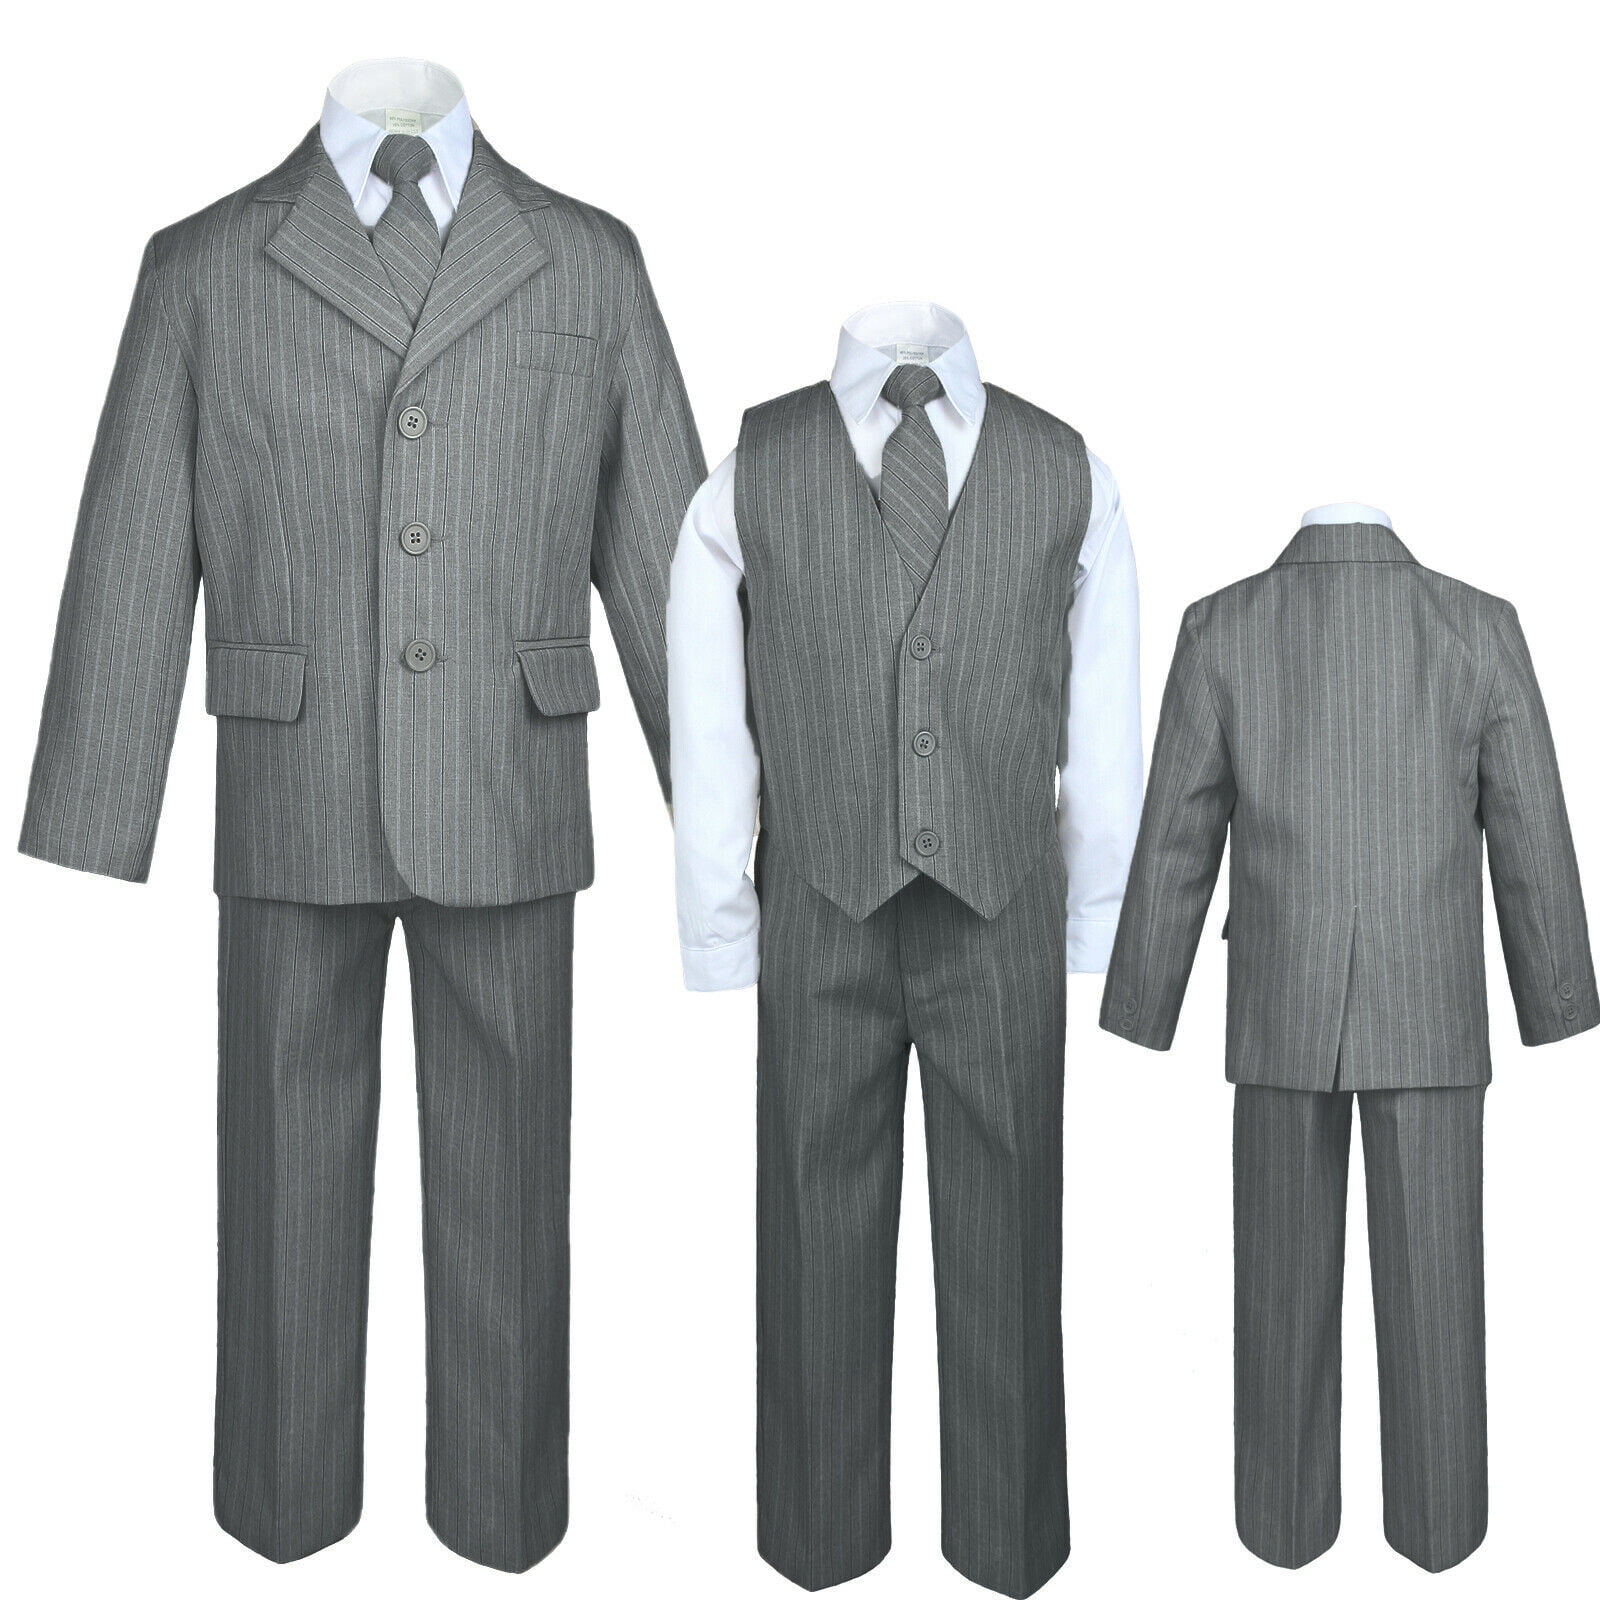 Boys Baby Toddler Kid Party Formal Wedding Dark Grey Tuxedo 5pc Suits Set Sz S-7 